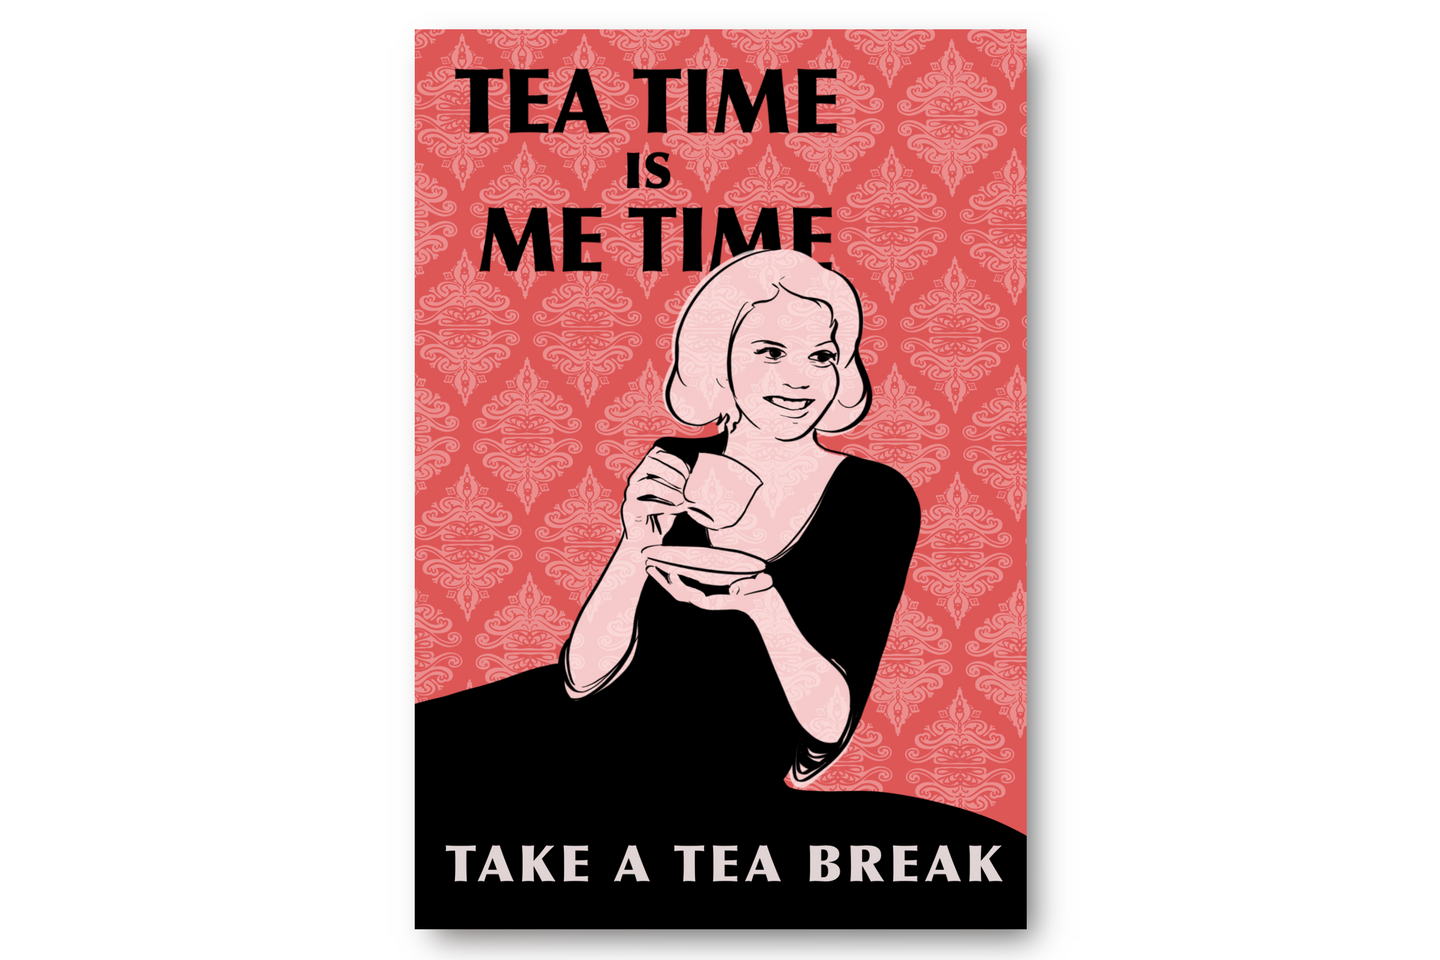 Tea Time is Me Time